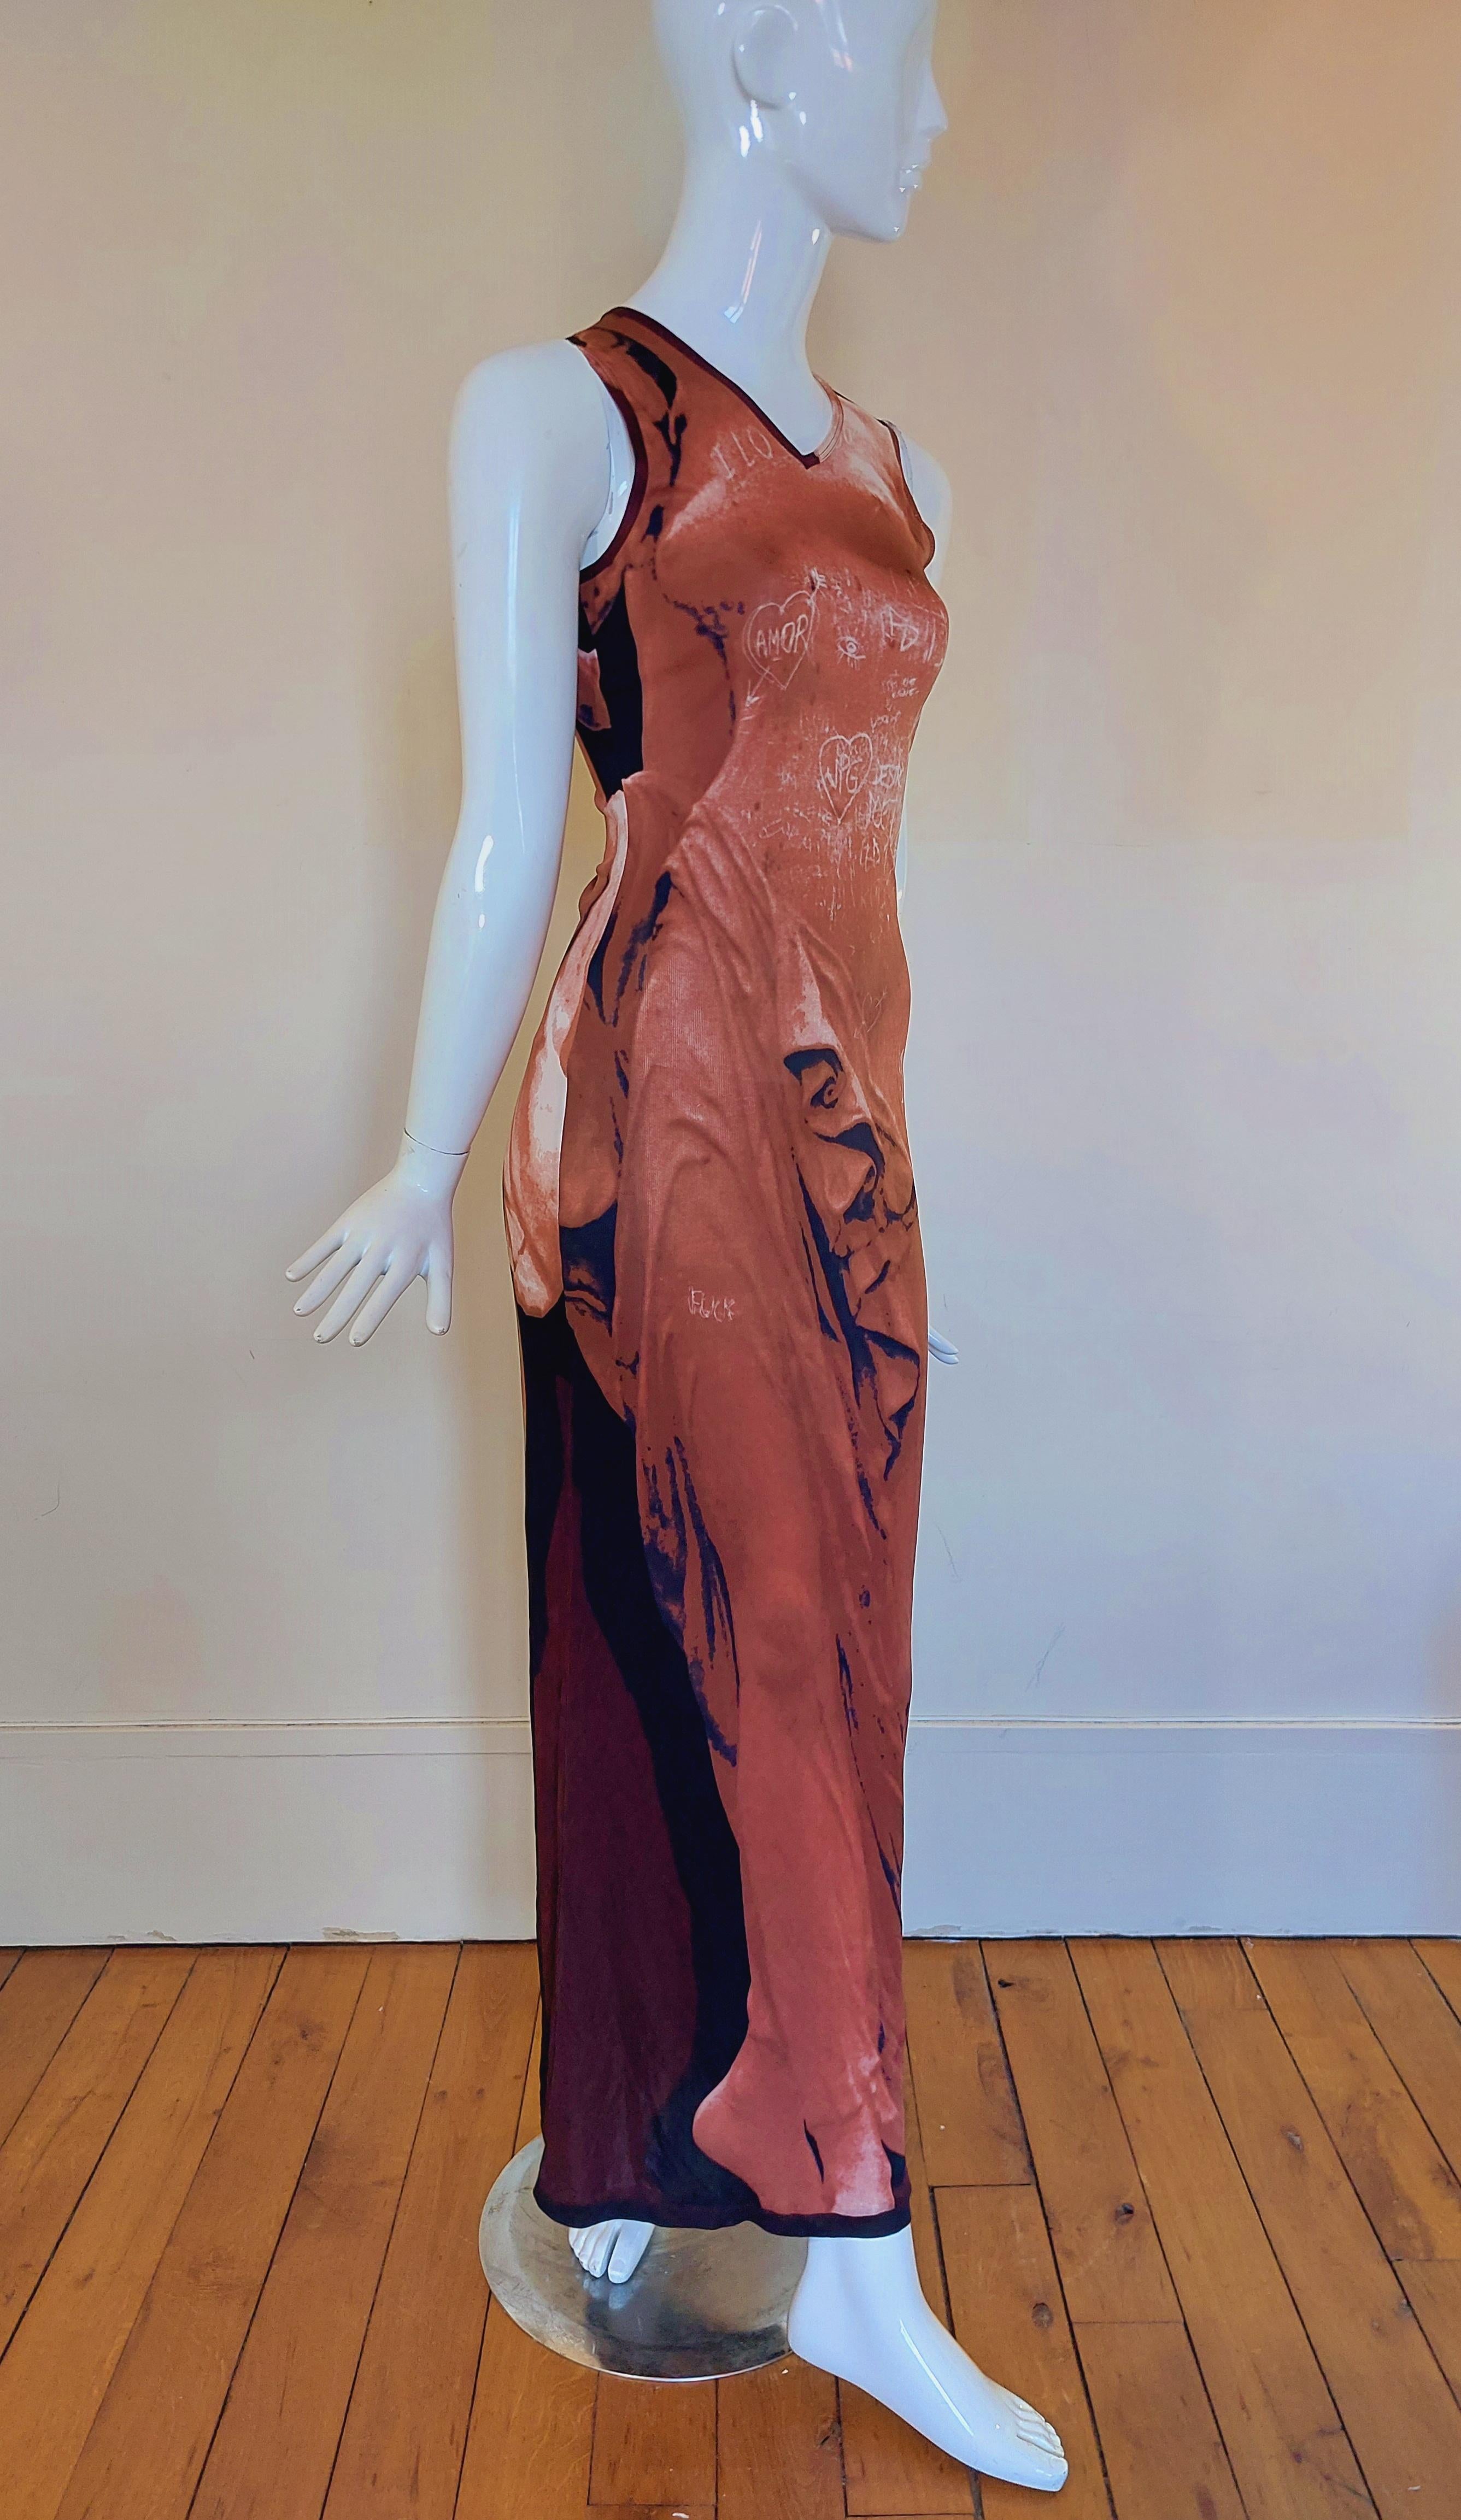 Jean Paul Gaultier S1999 Graffiti Goddess Venus Nude Trompe L'oeil Runway Dress For Sale 6